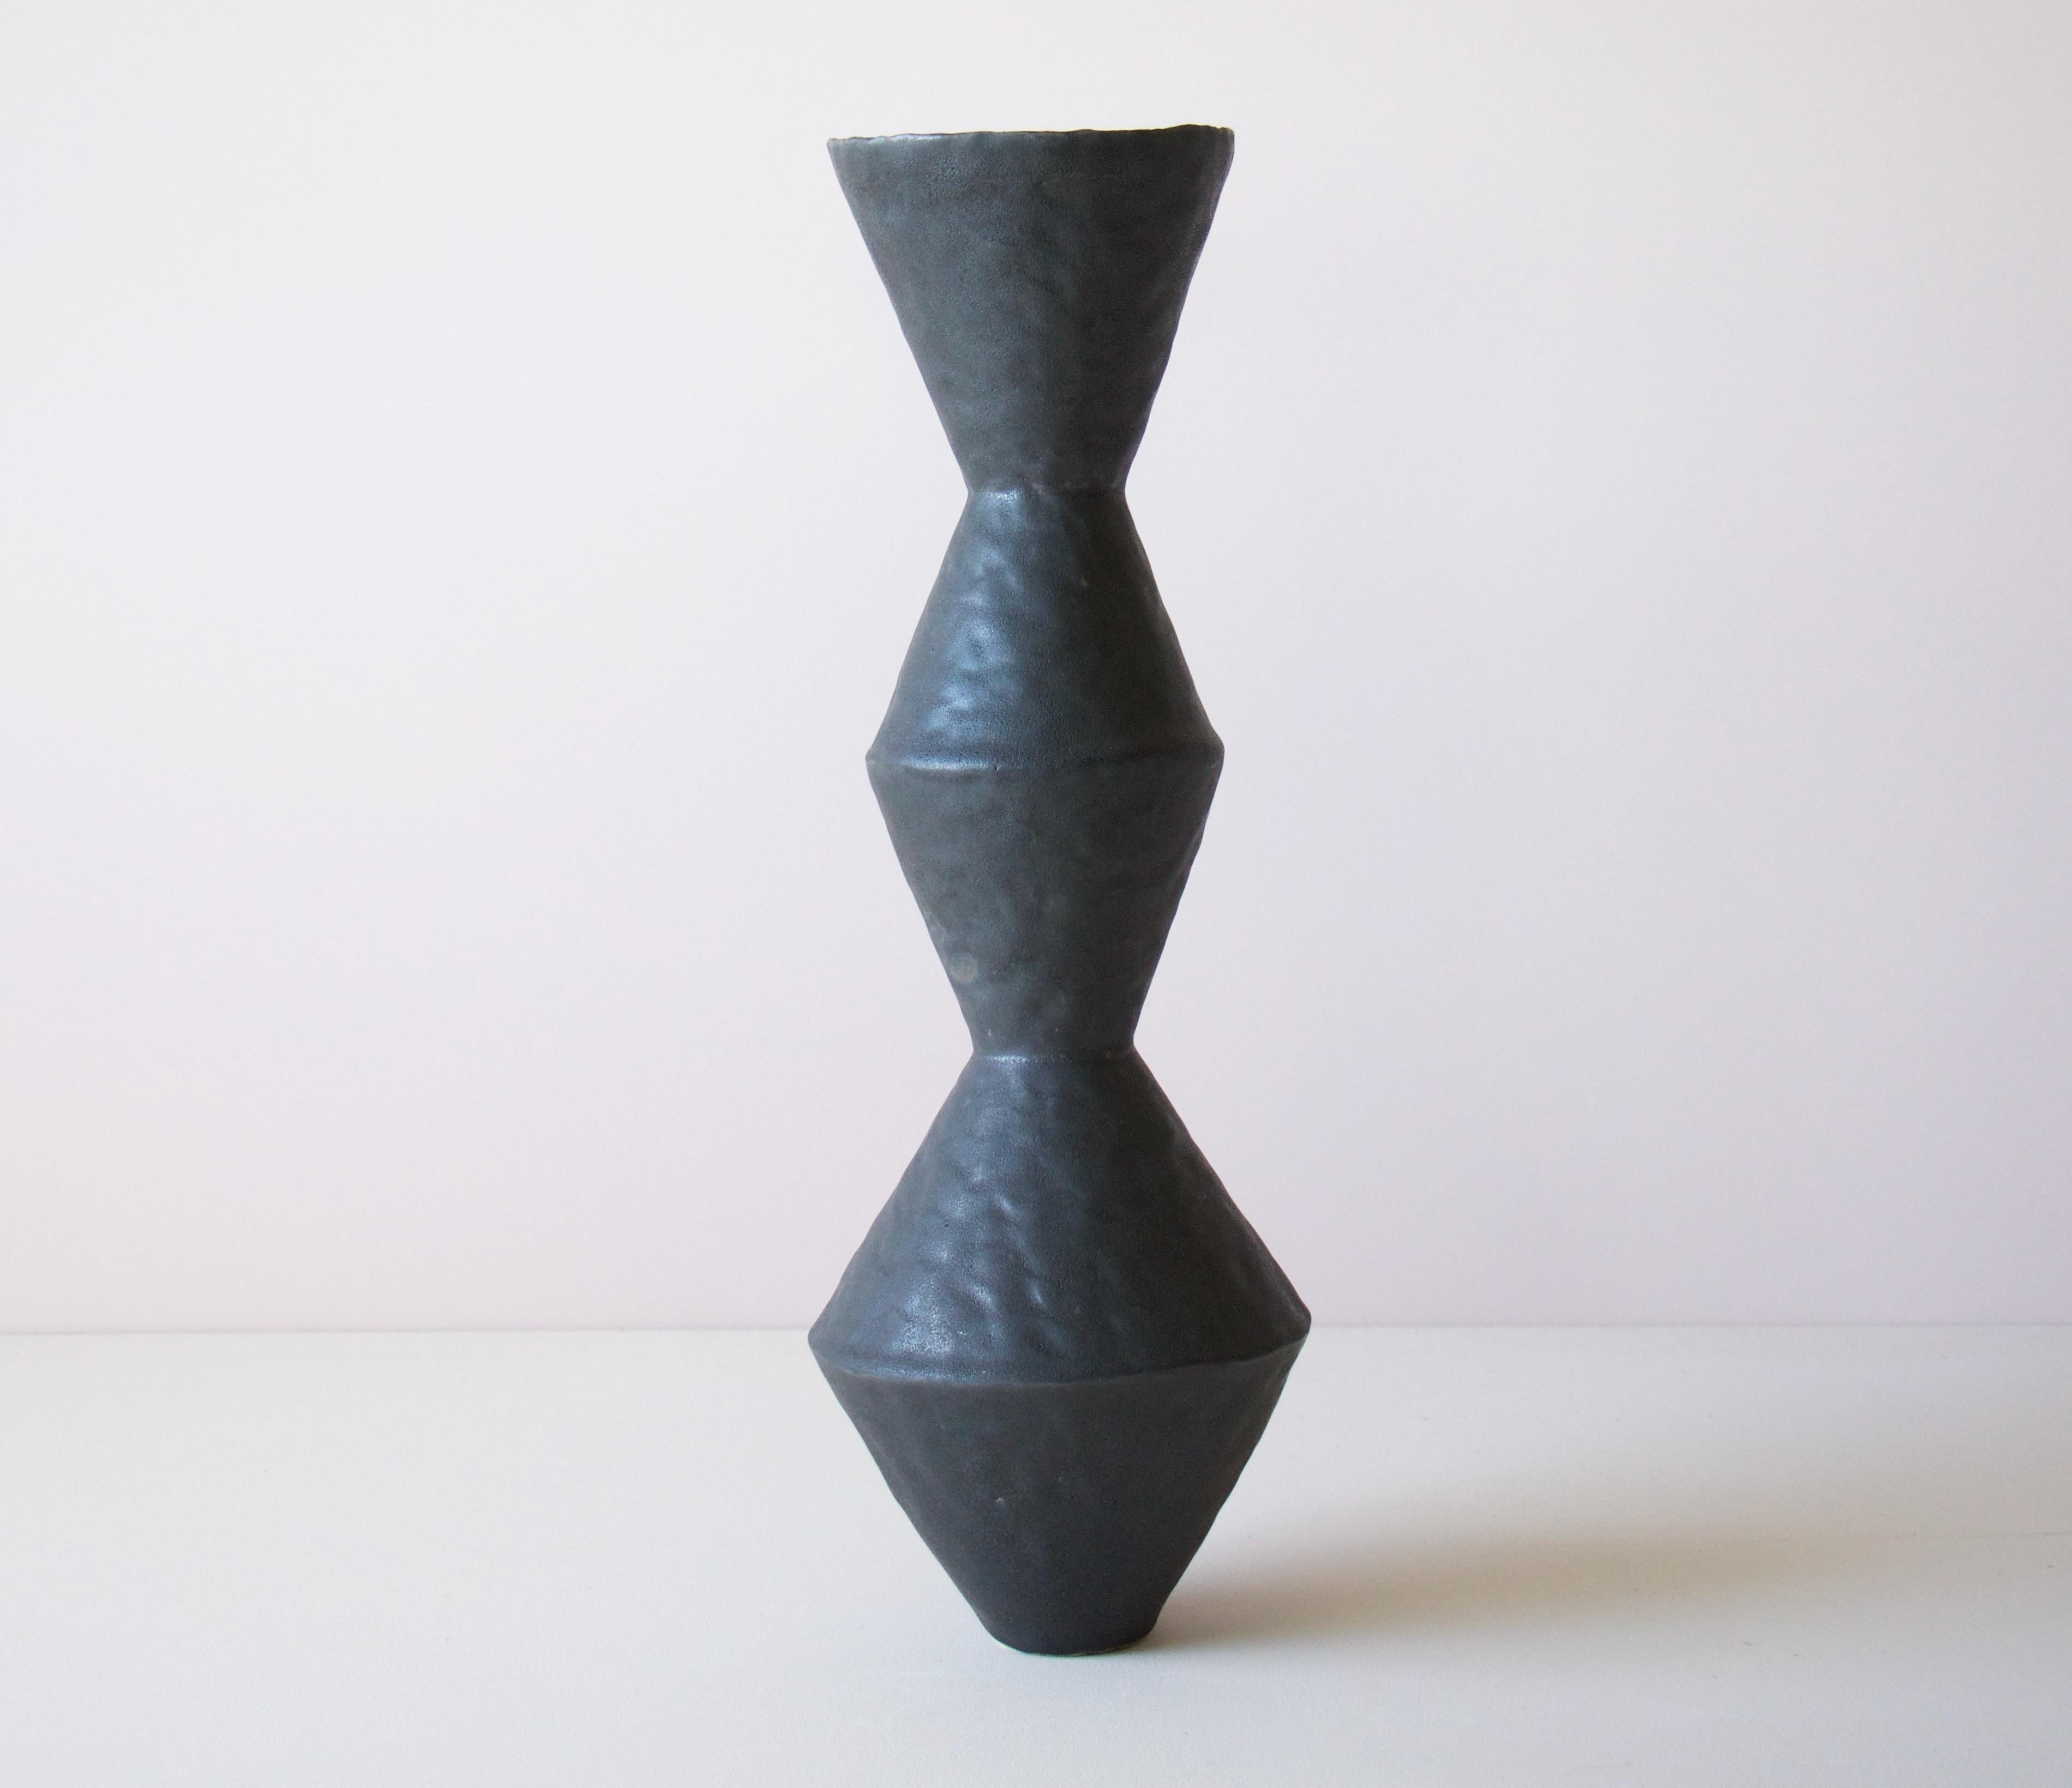 Organic Modern Giselle Hicks Contemporary Black Ceramic Vase, 2020